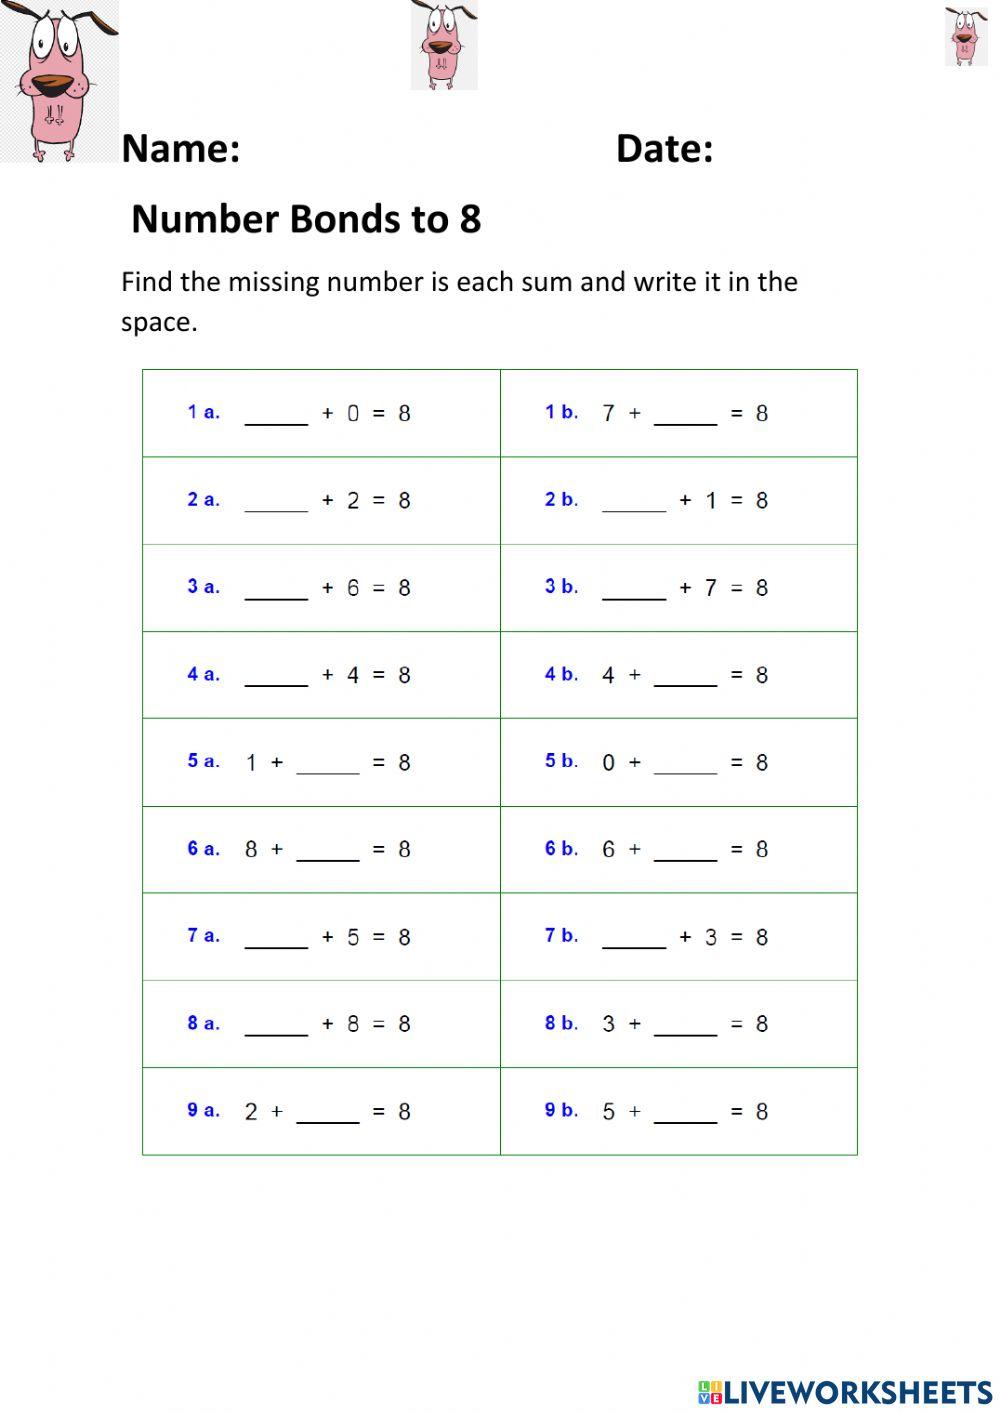 Number Bonds to 8